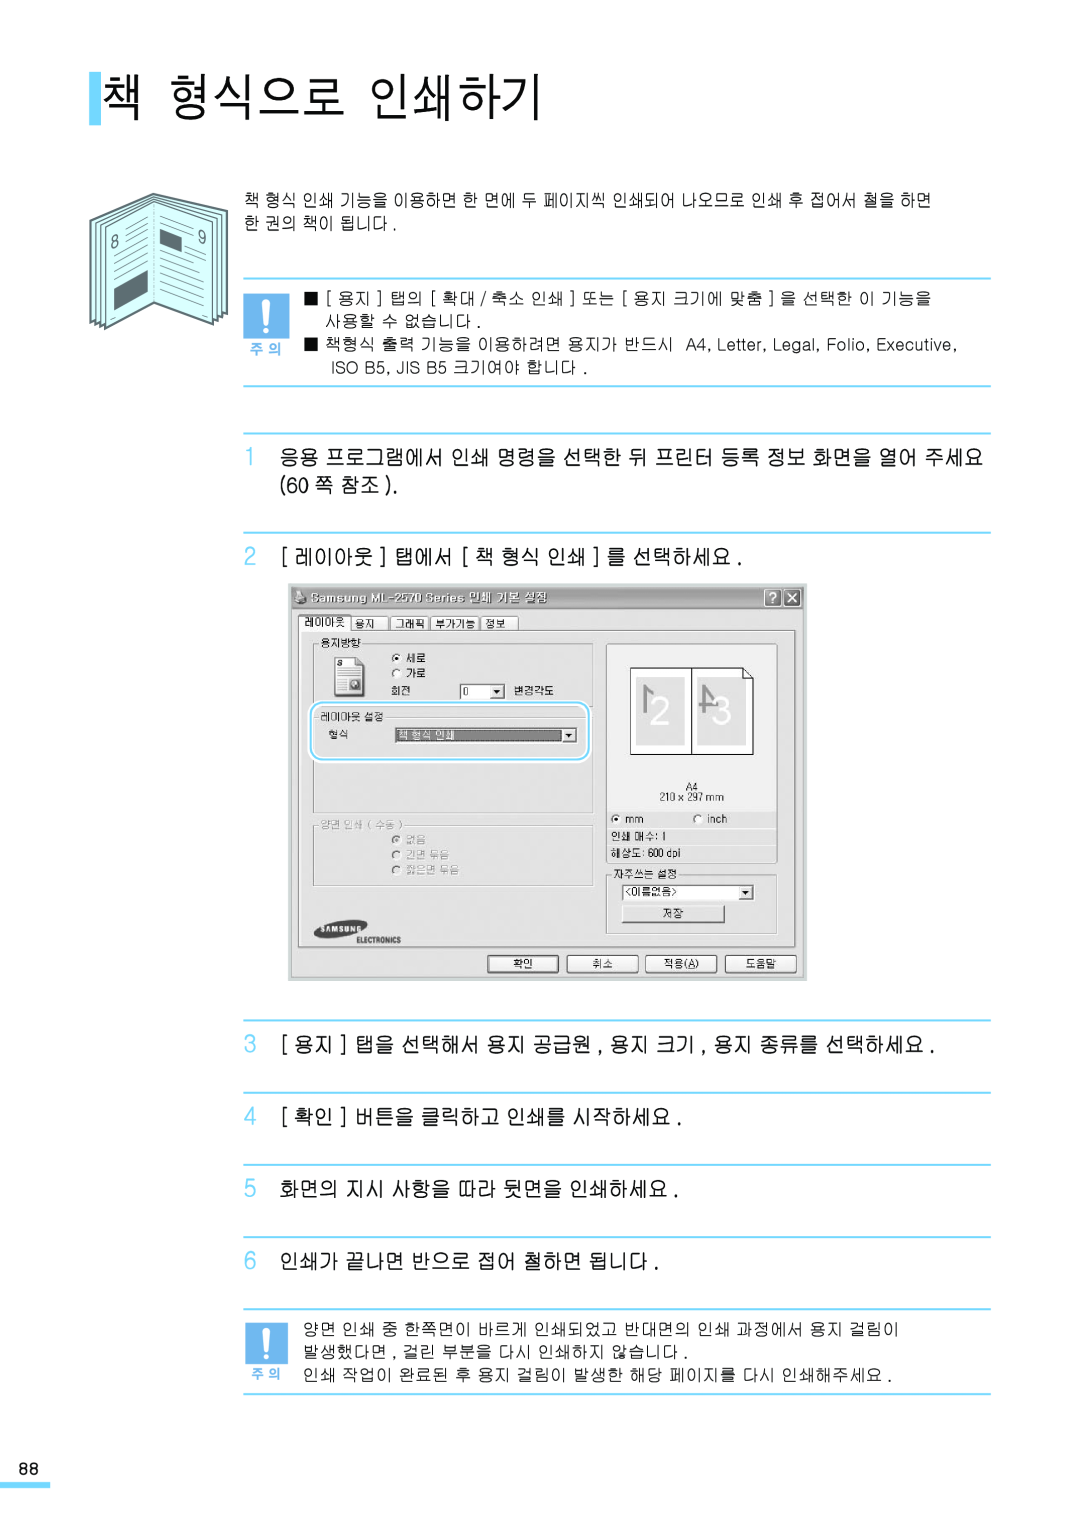 Samsung ML-2571N manual 책 형식으로 인쇄하기, 1 응용 프로그램에서 인쇄 명령을 선택한 뒤 프린터 등록 정보 화면을 열어 주세요 60 쪽 참조, 2 레이아웃 탭에서 책 형식 인쇄 를 선택하세요 